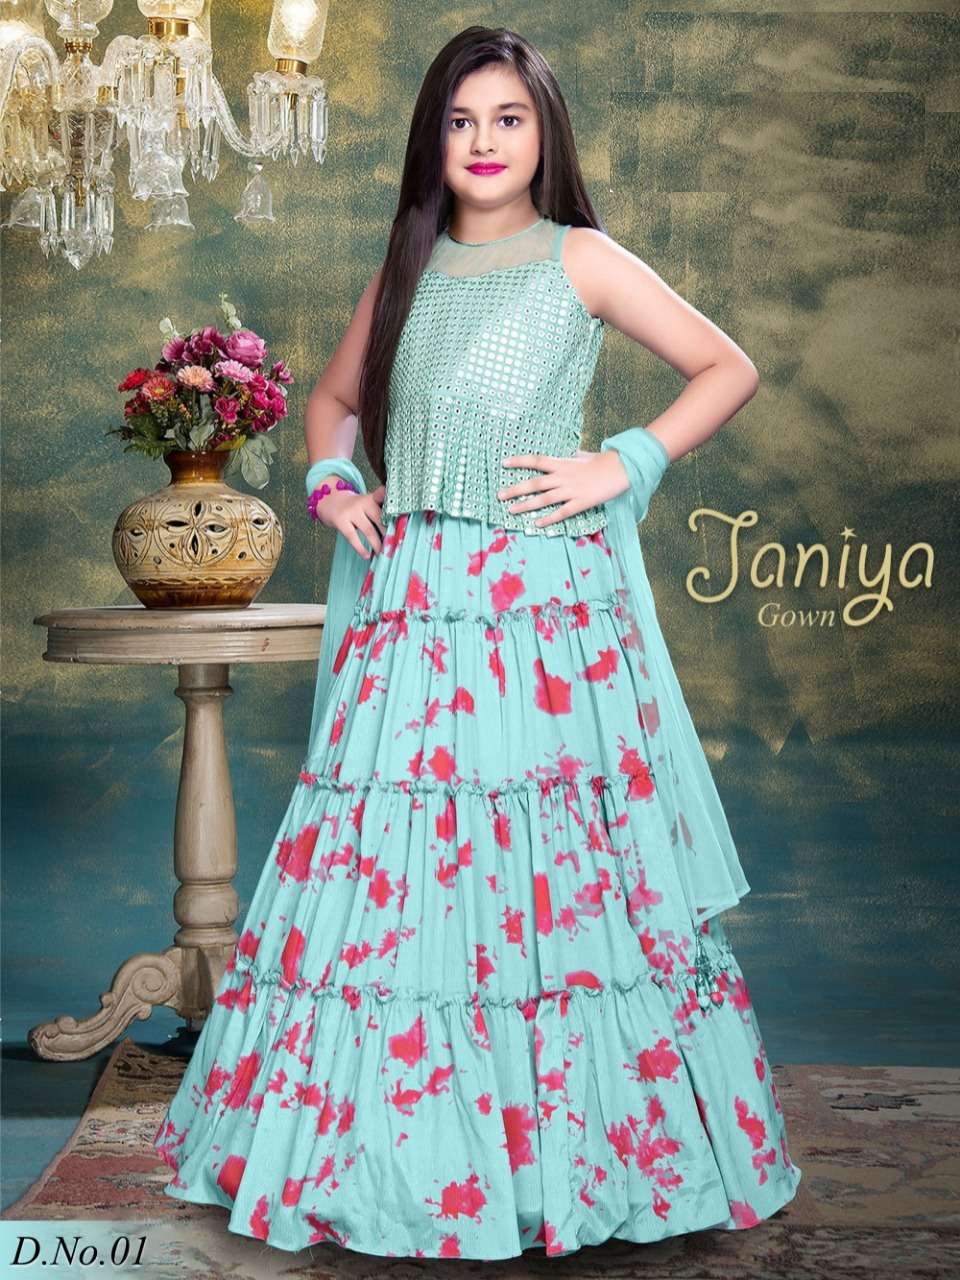 janiya lehenga choli 6 colour fabric polireyon mirror work dupatta softnet size 6 to 12 year girls kidswear lehenga choli girls kids wear 